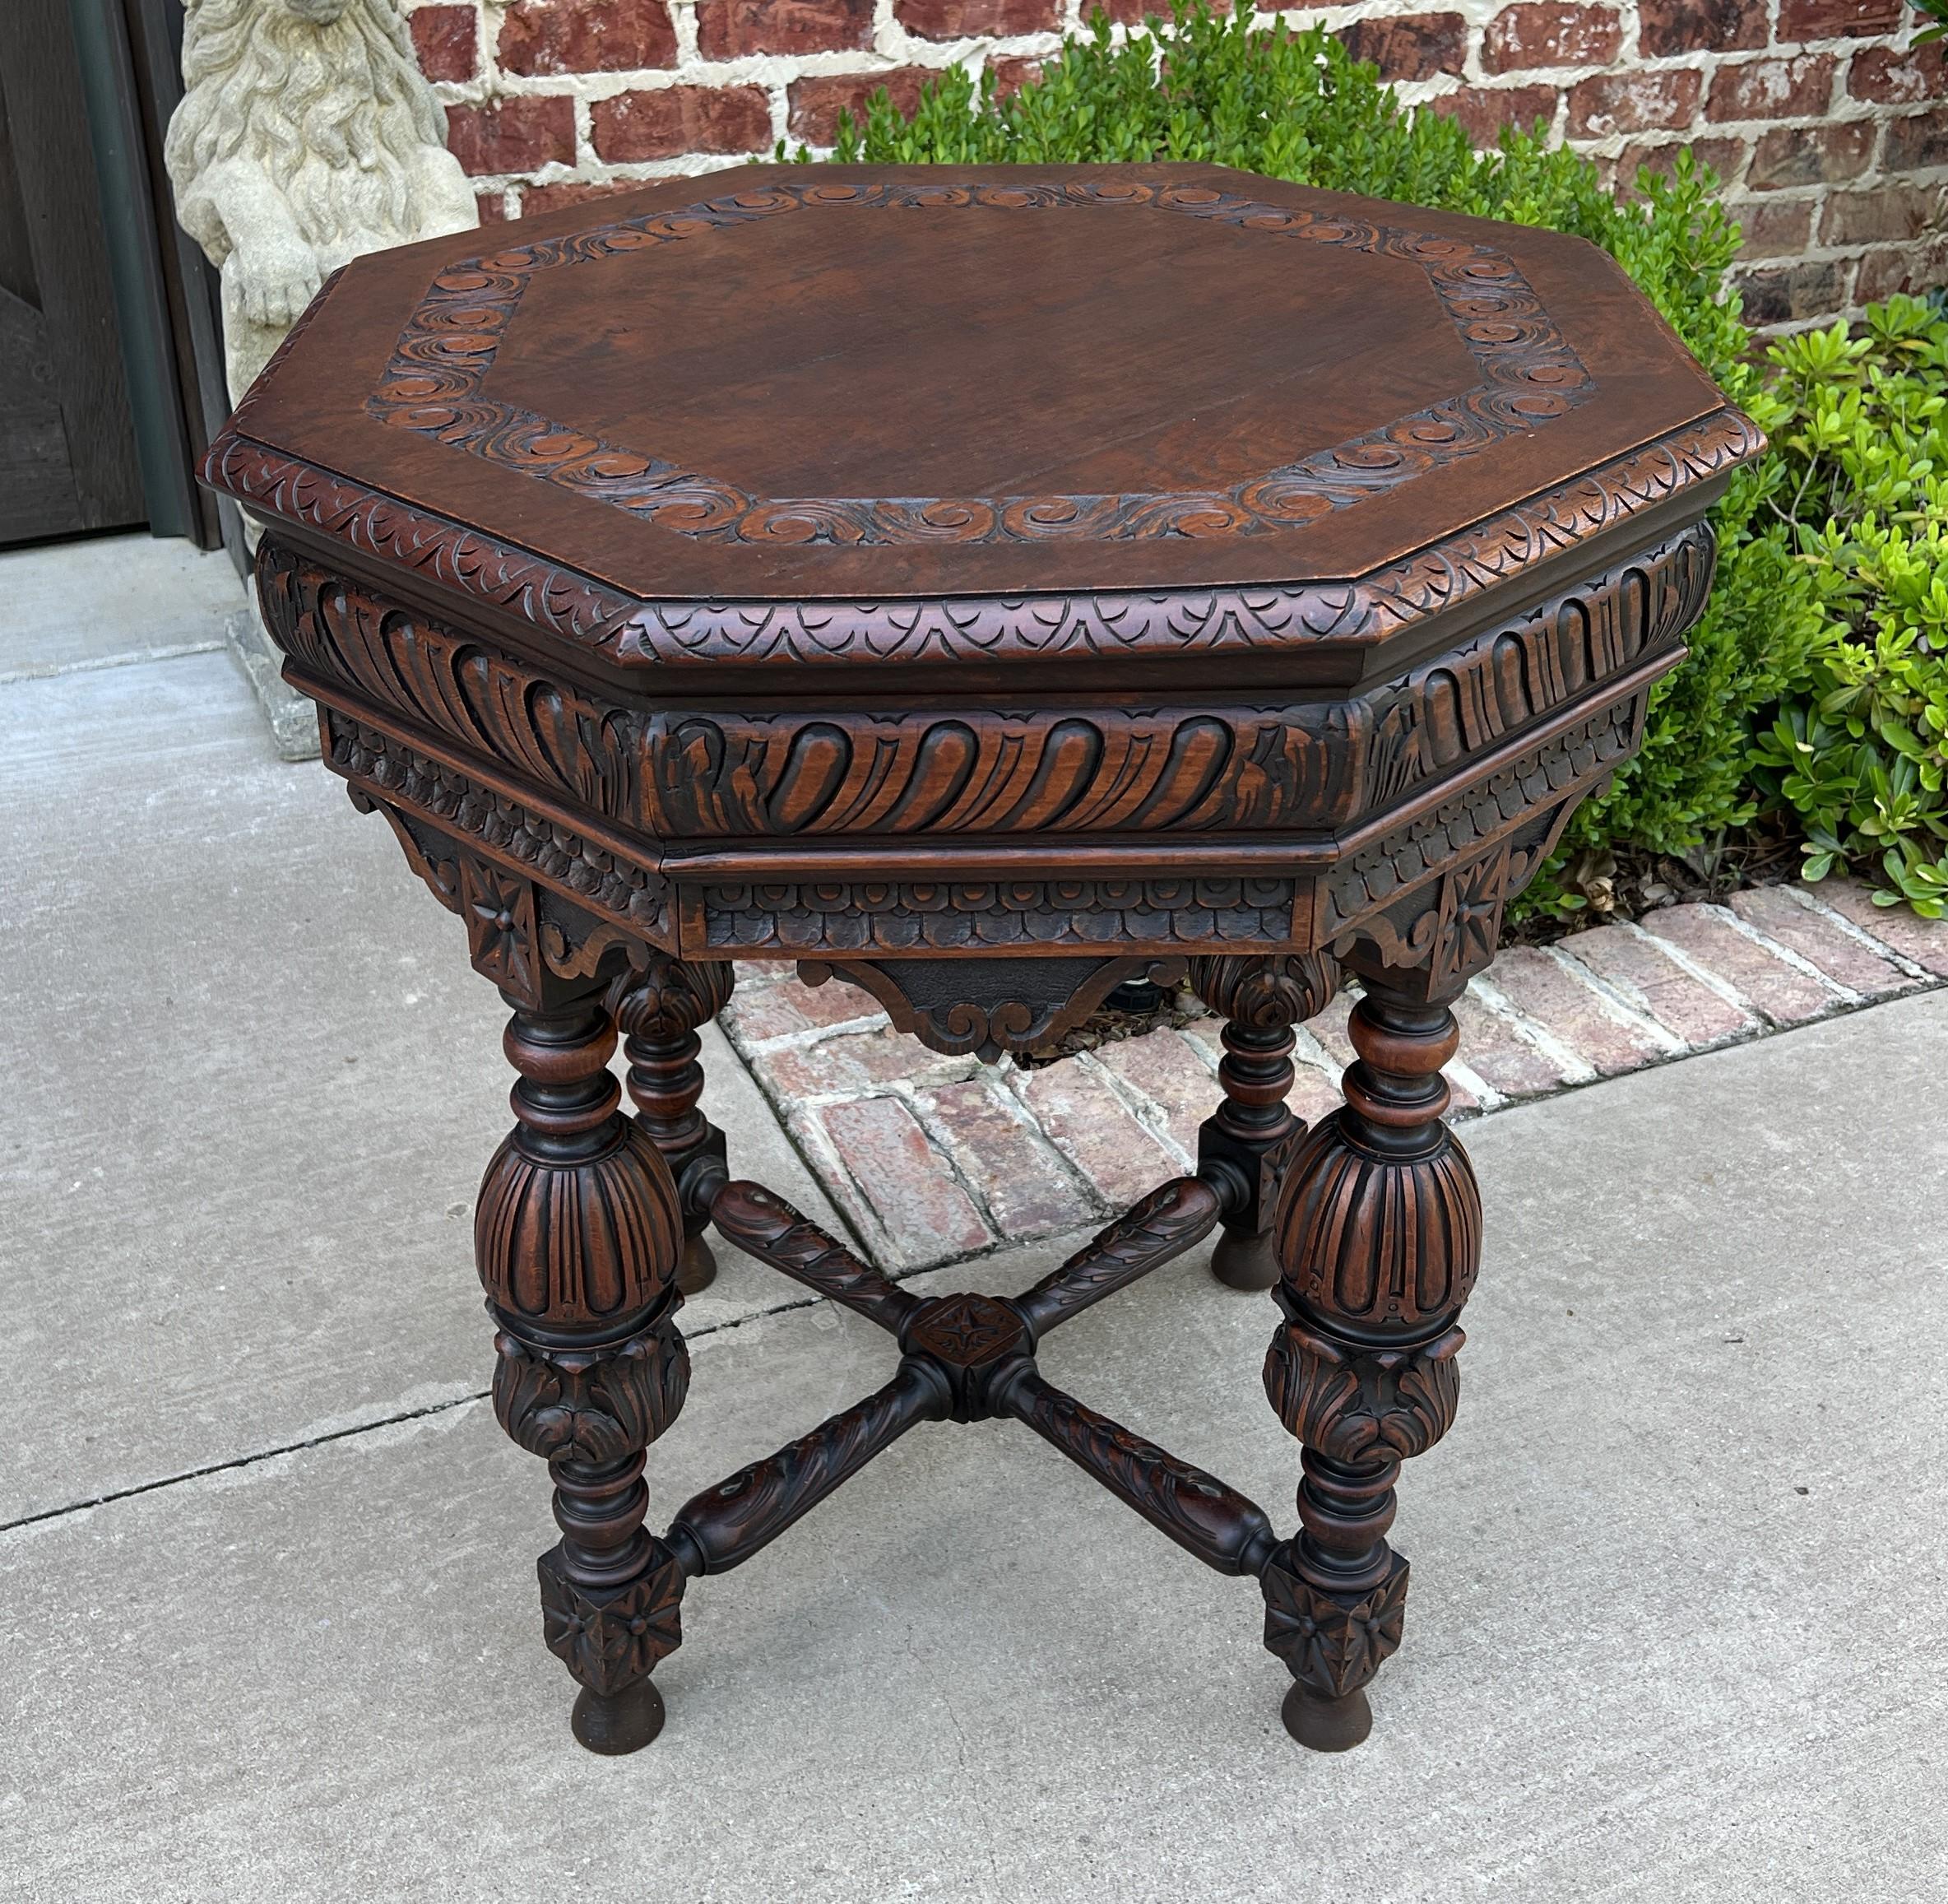 Antique French Table Octagonal Renaissance Revival Carved Oak, 19th Century For Sale 12